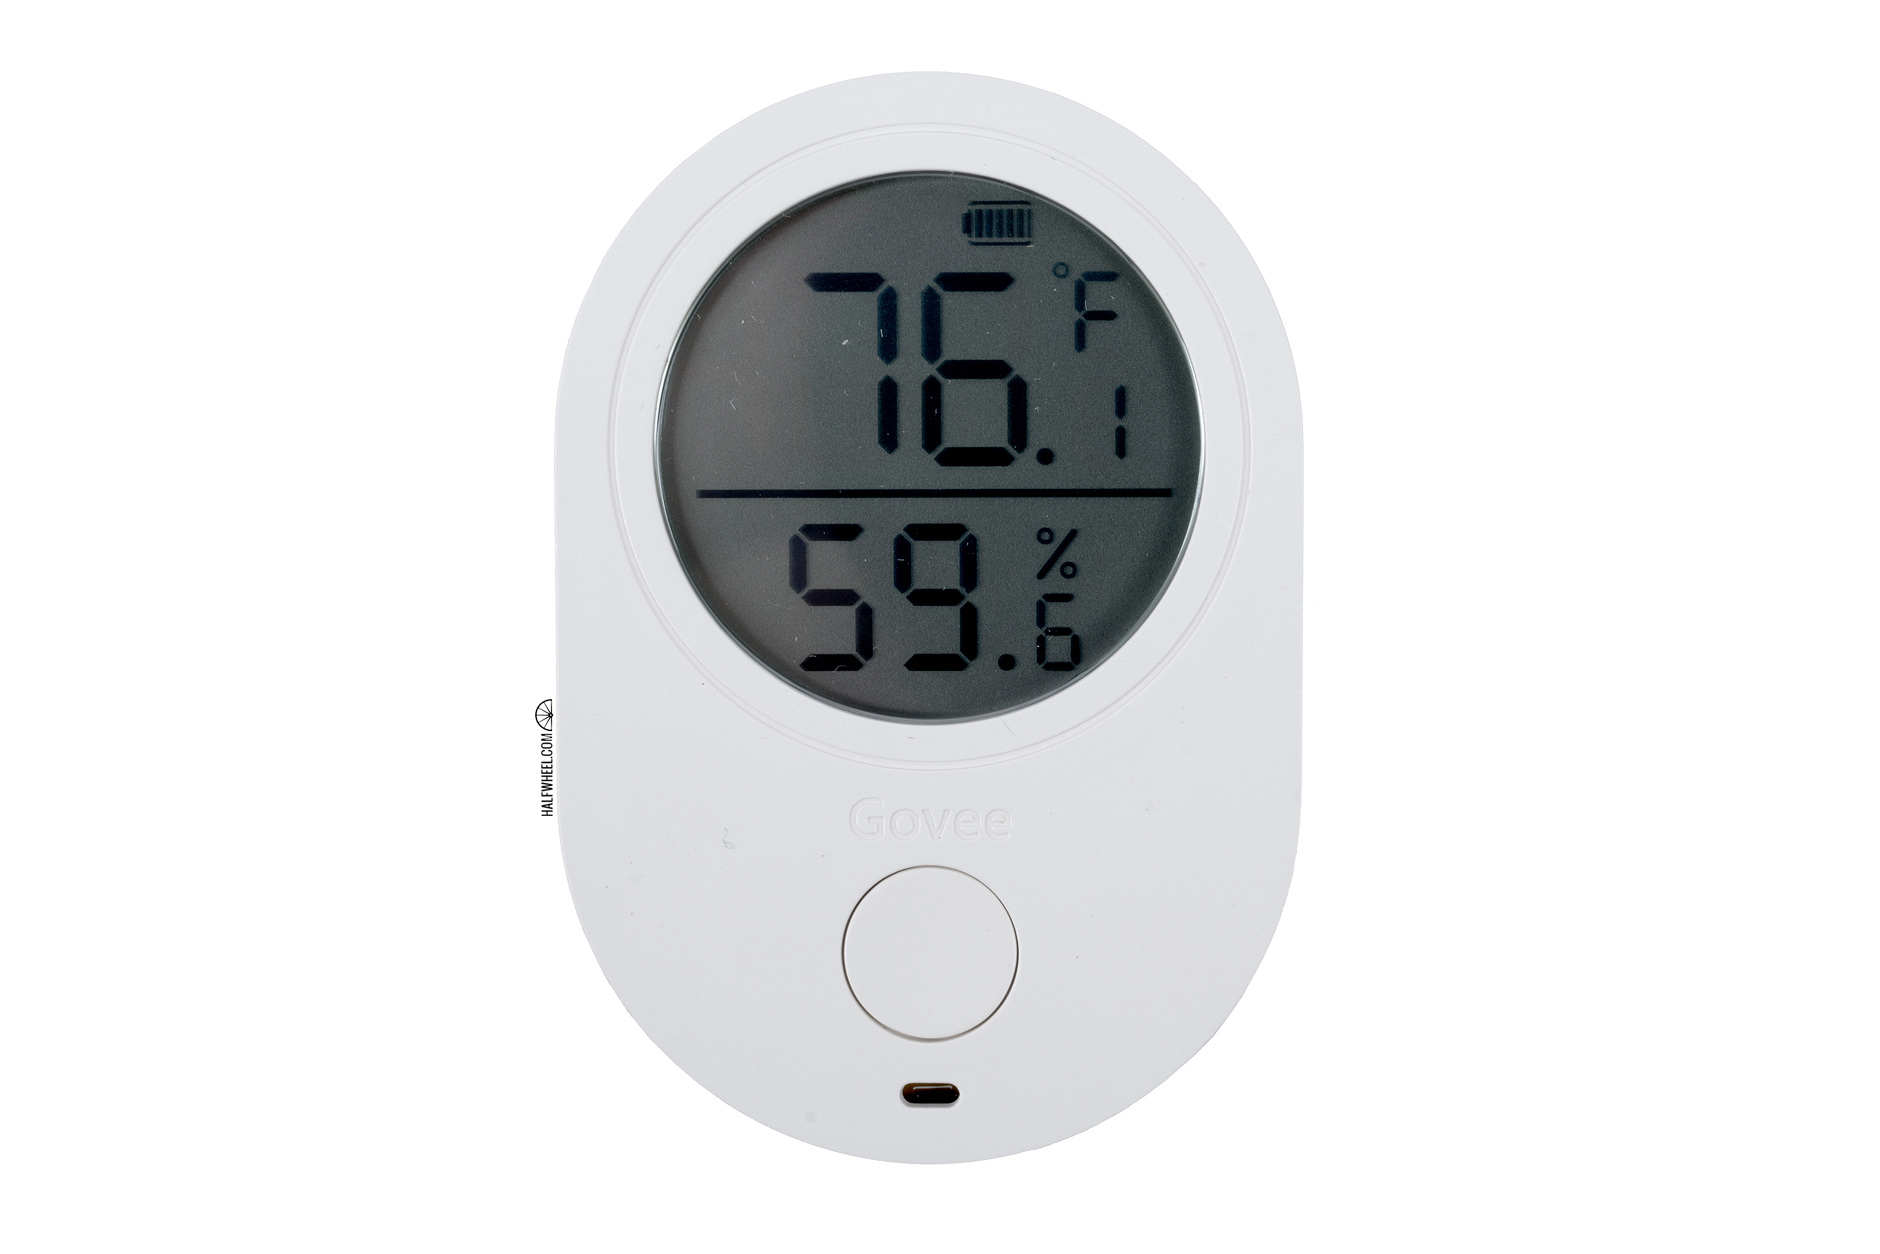 https://halfwheel.com/wp-content/uploads/2018/12/Govee-Bluetooth-Temperature-Humidity-Monitor-4.jpg